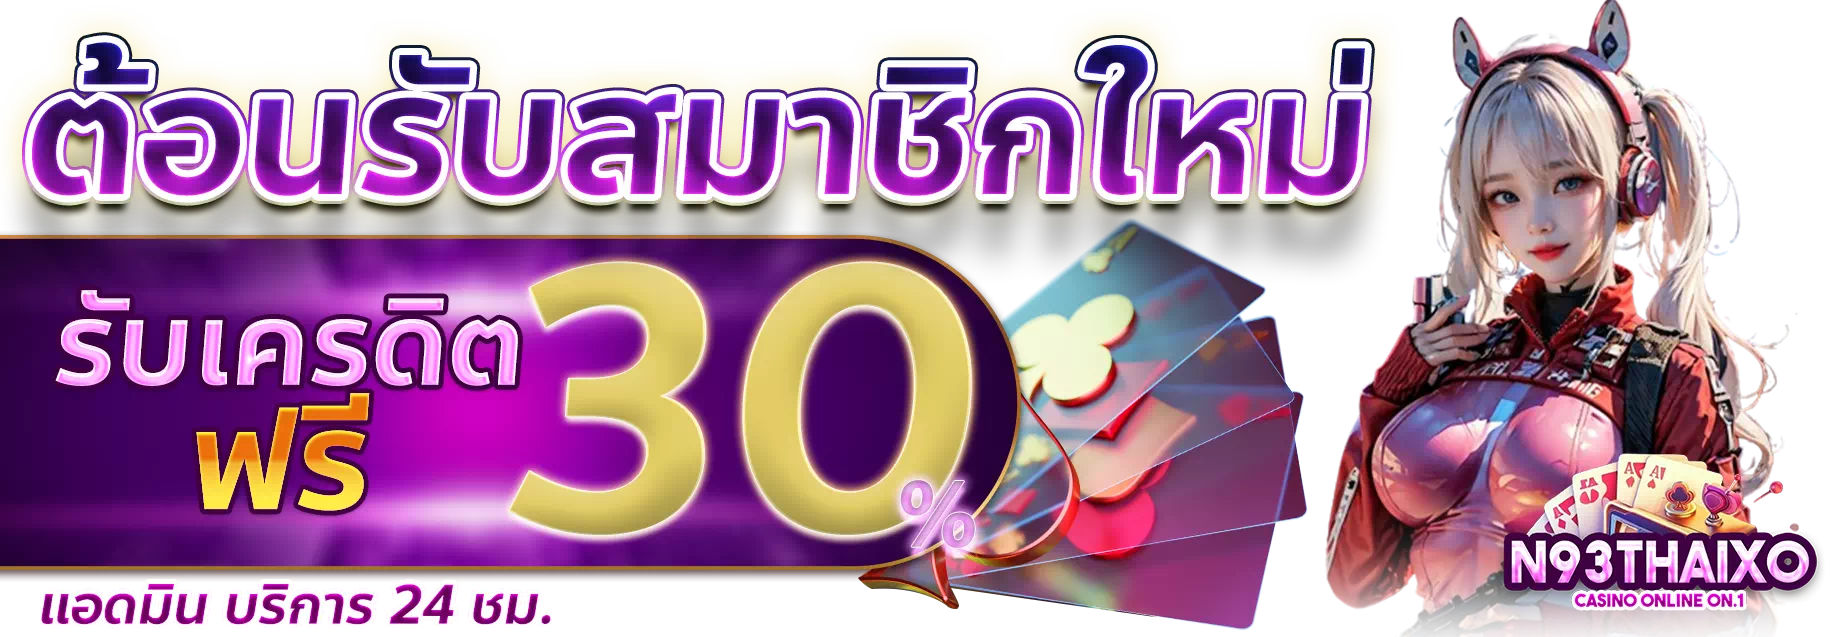 n93thai casino